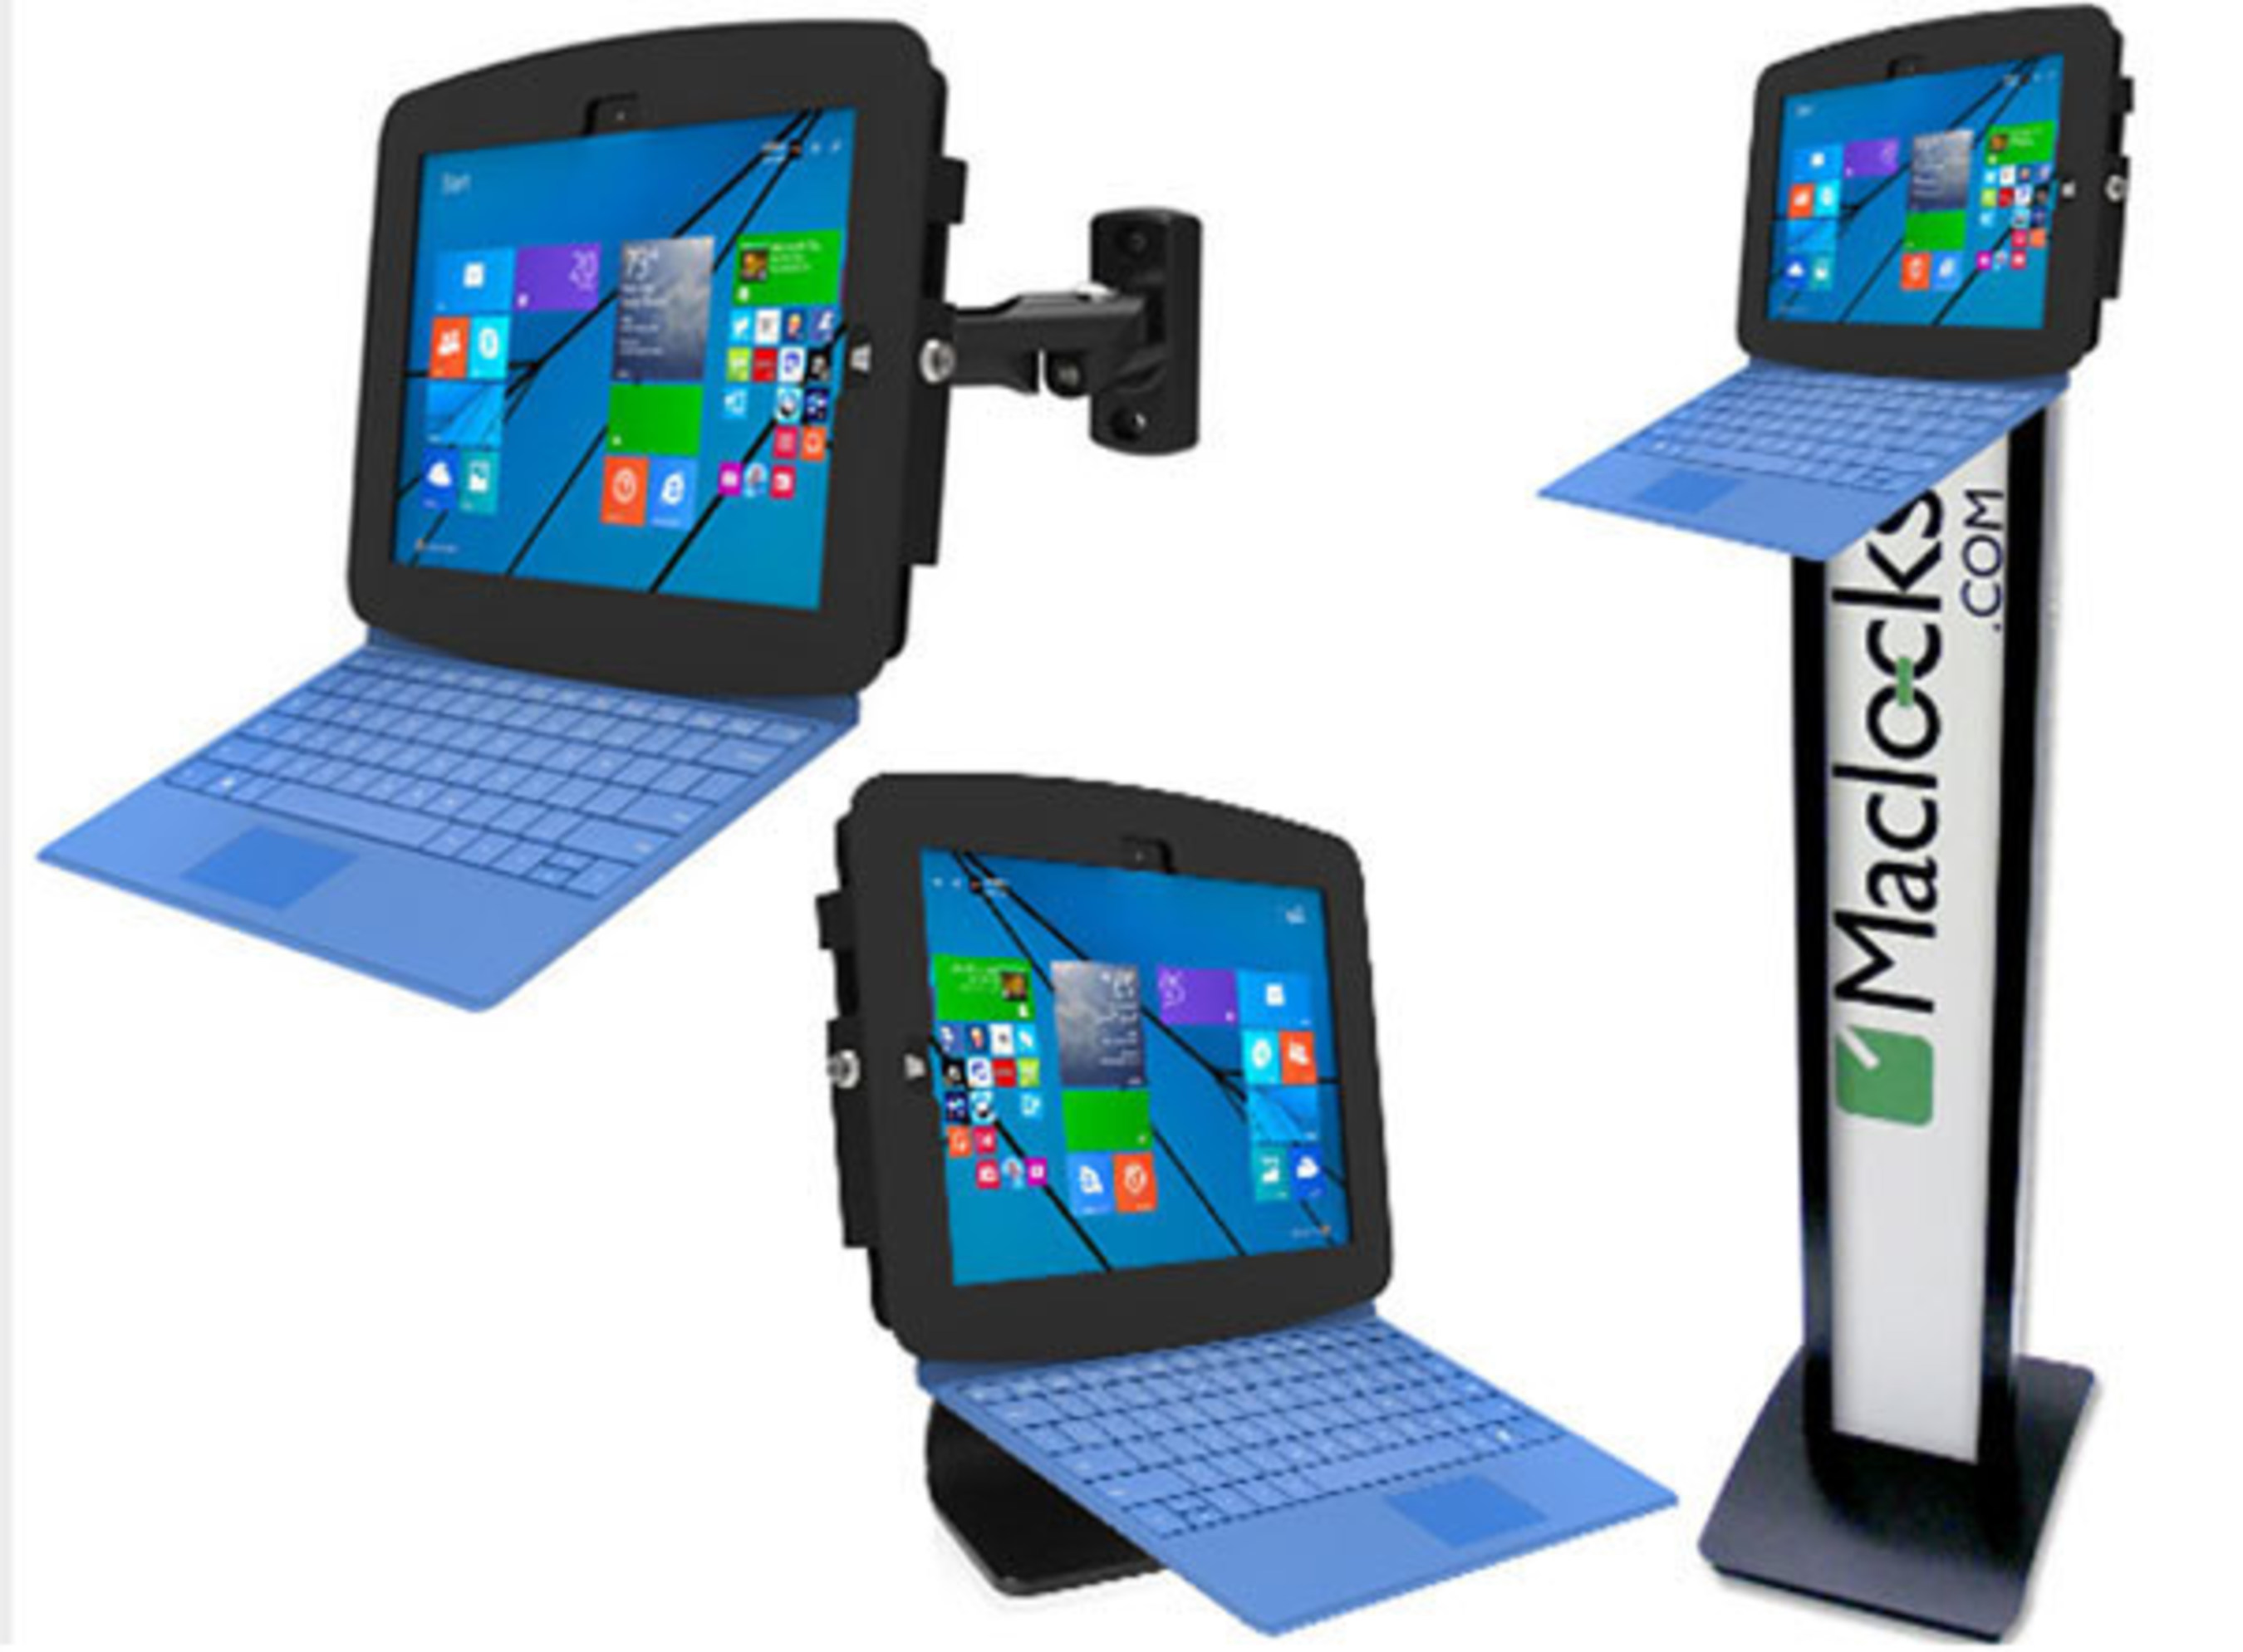 Maclocks Surface Enclosure for Microsoft Surface Pro 3 (PRNewsFoto/Maclock)